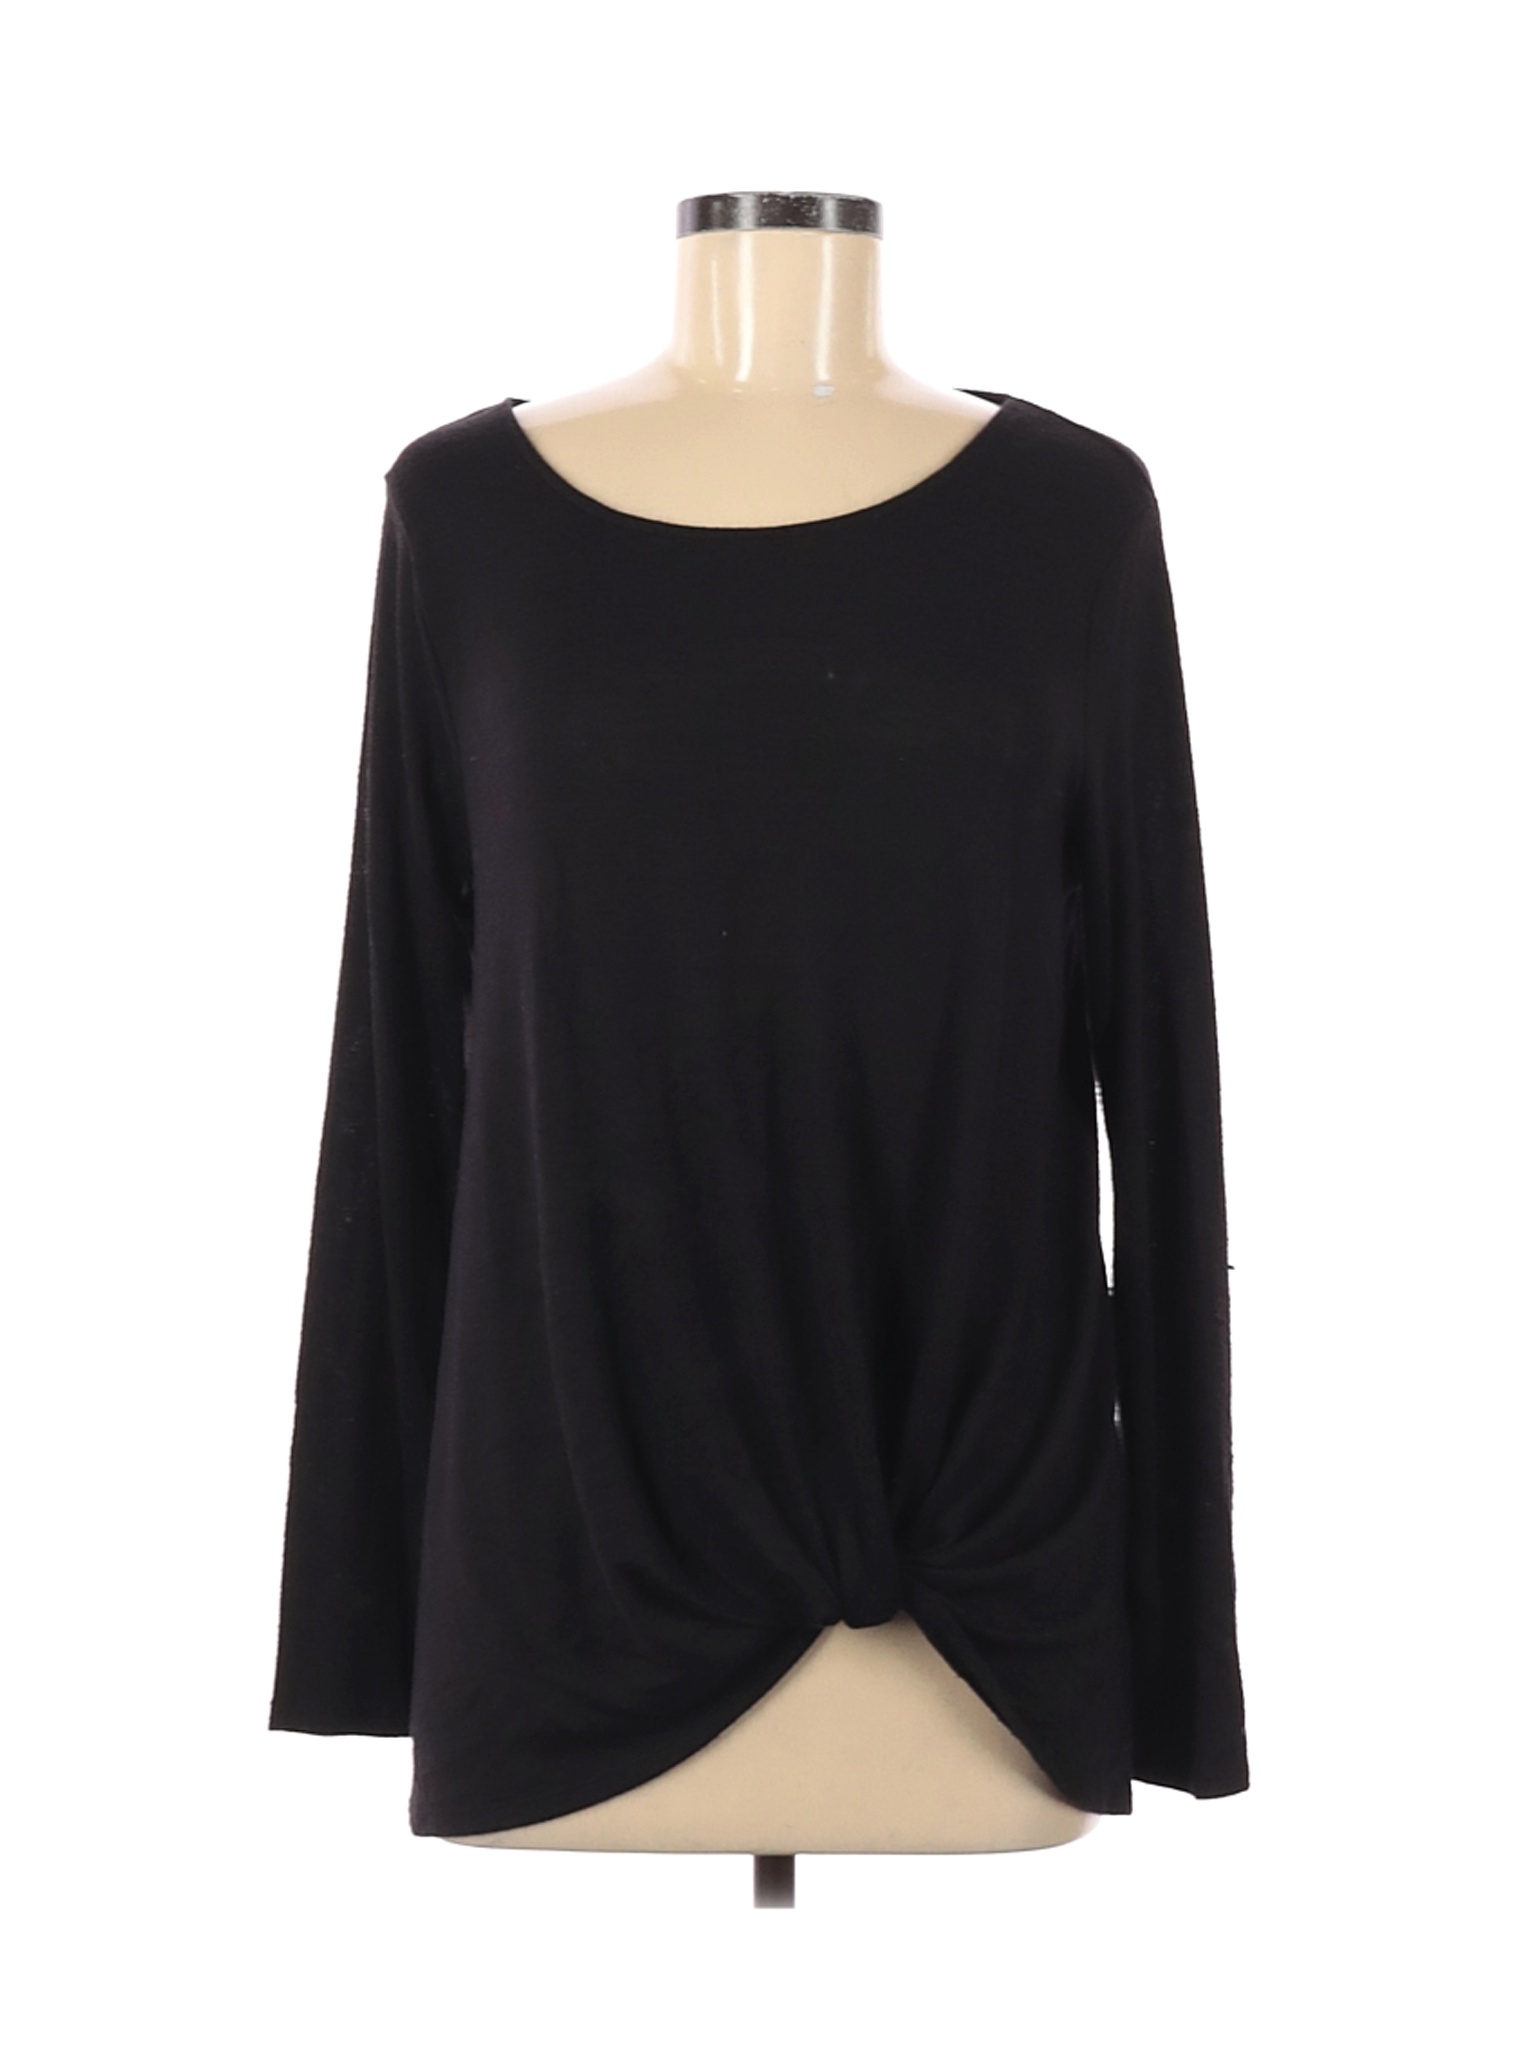 Apt. 9 Women Black Long Sleeve T-Shirt M | eBay